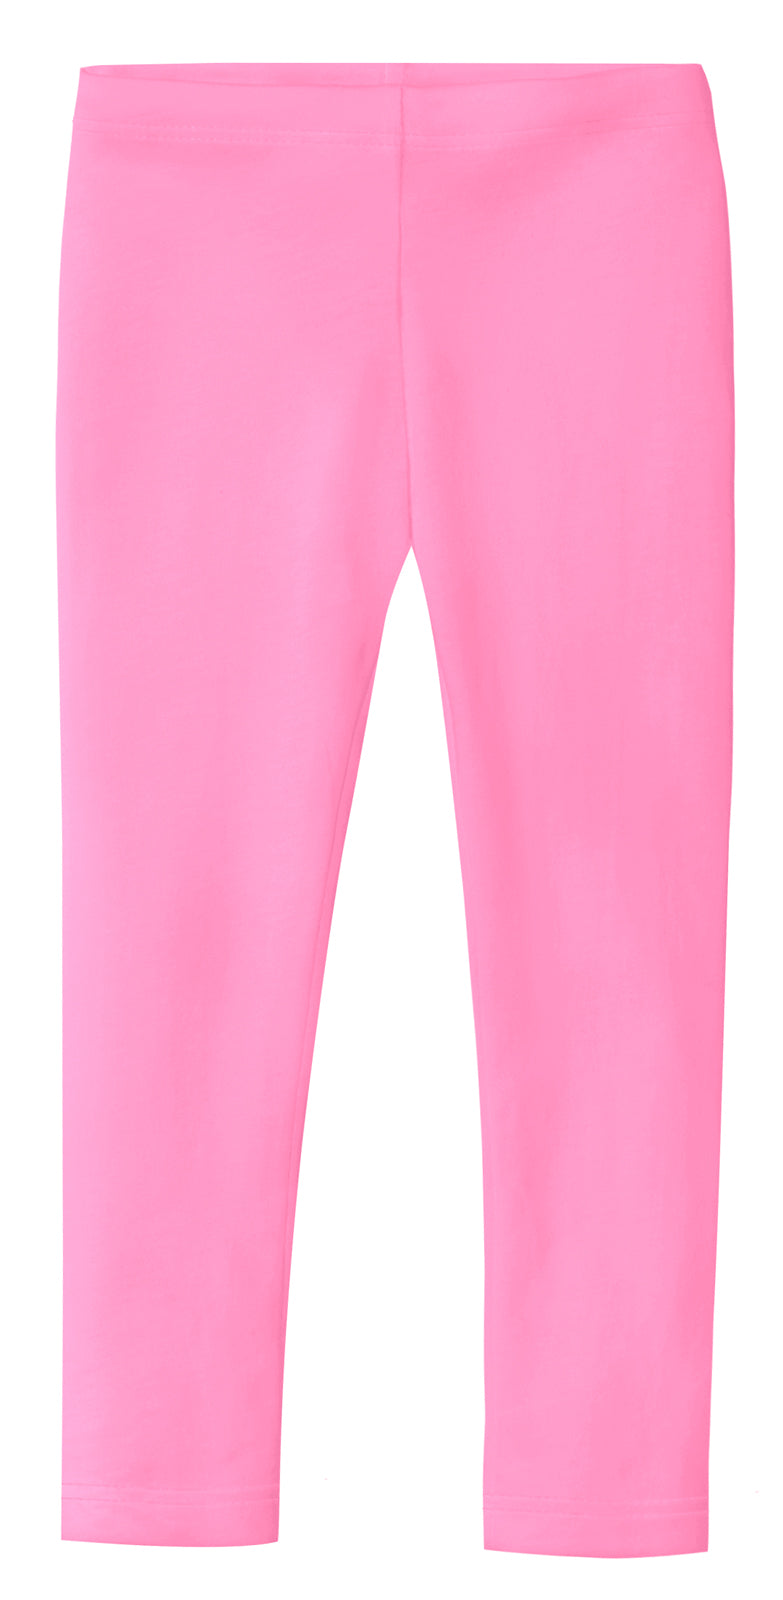 Buy BRATS N BEAUTY®-Women/Ladies/Girl Slimfit Cotton Printed Legging Pink  Color at